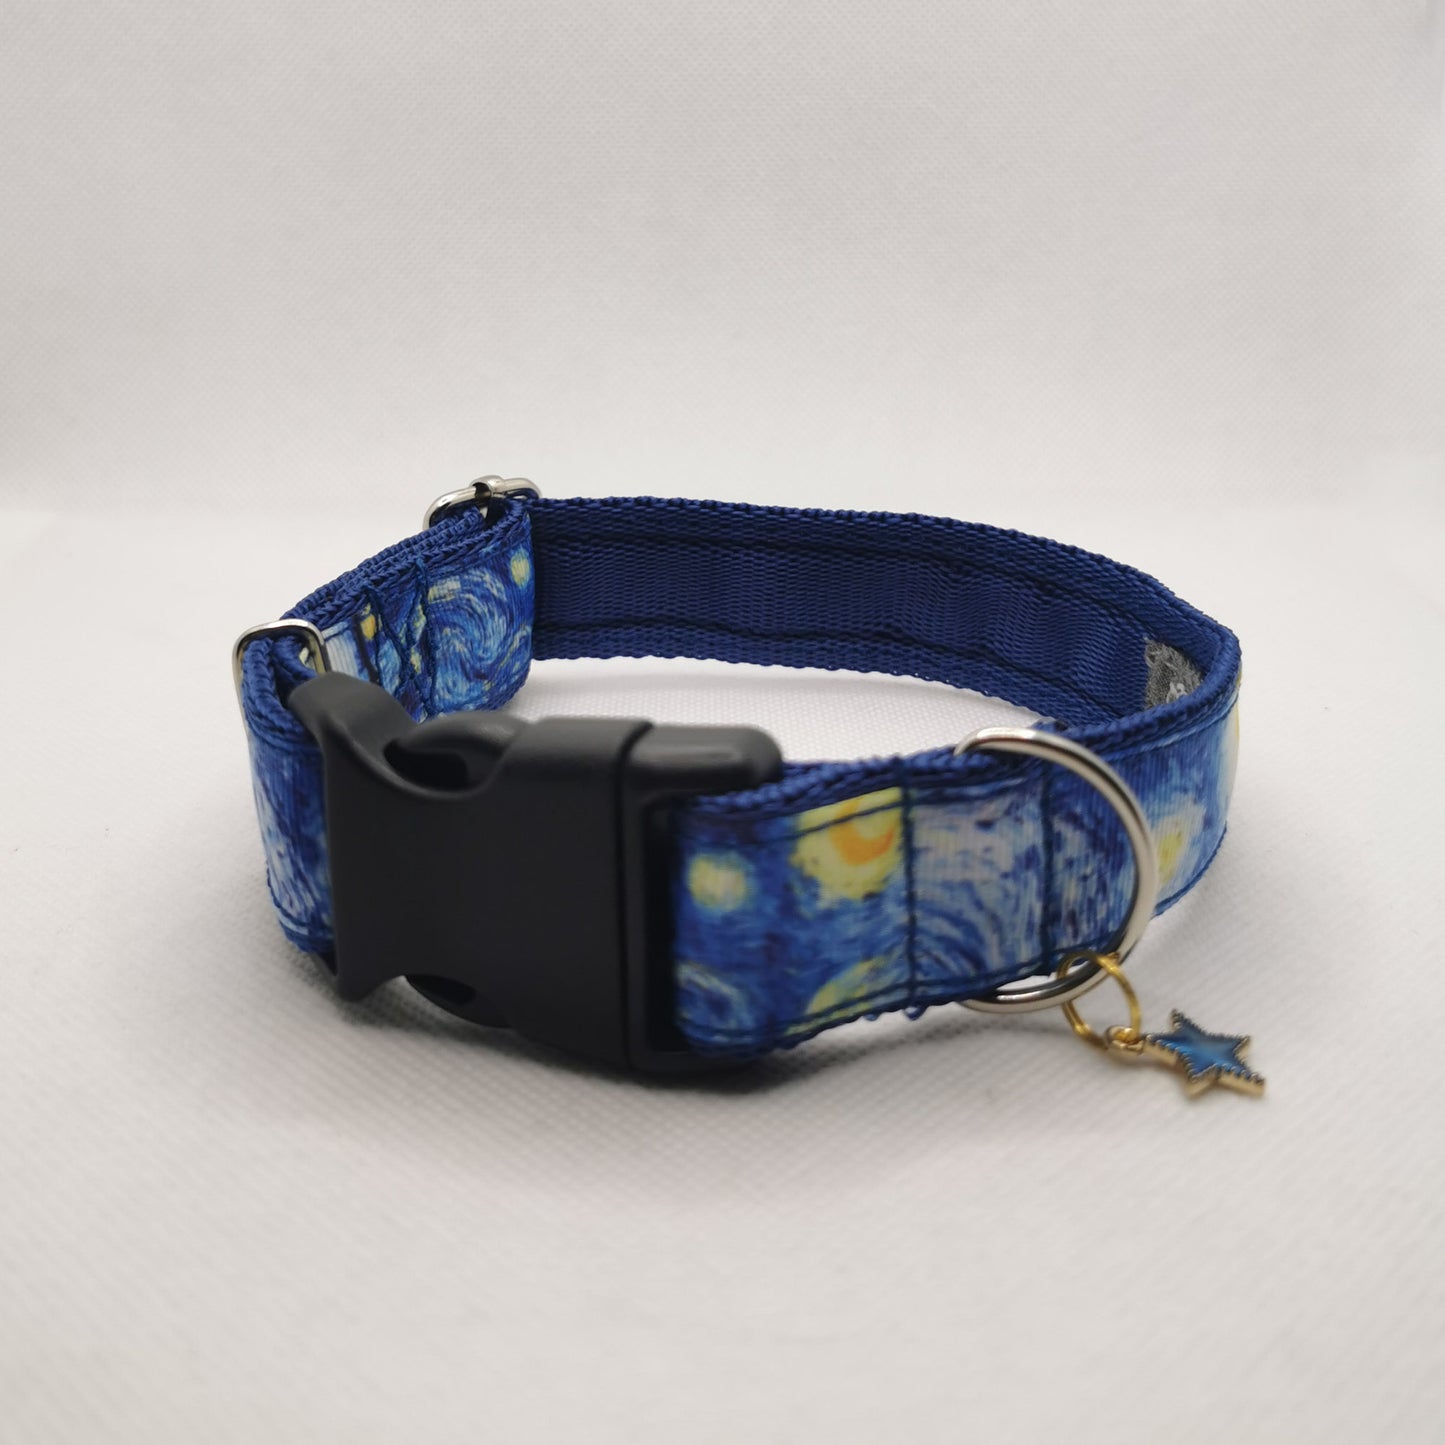 The Starry Night Van Gogh Dog Collar